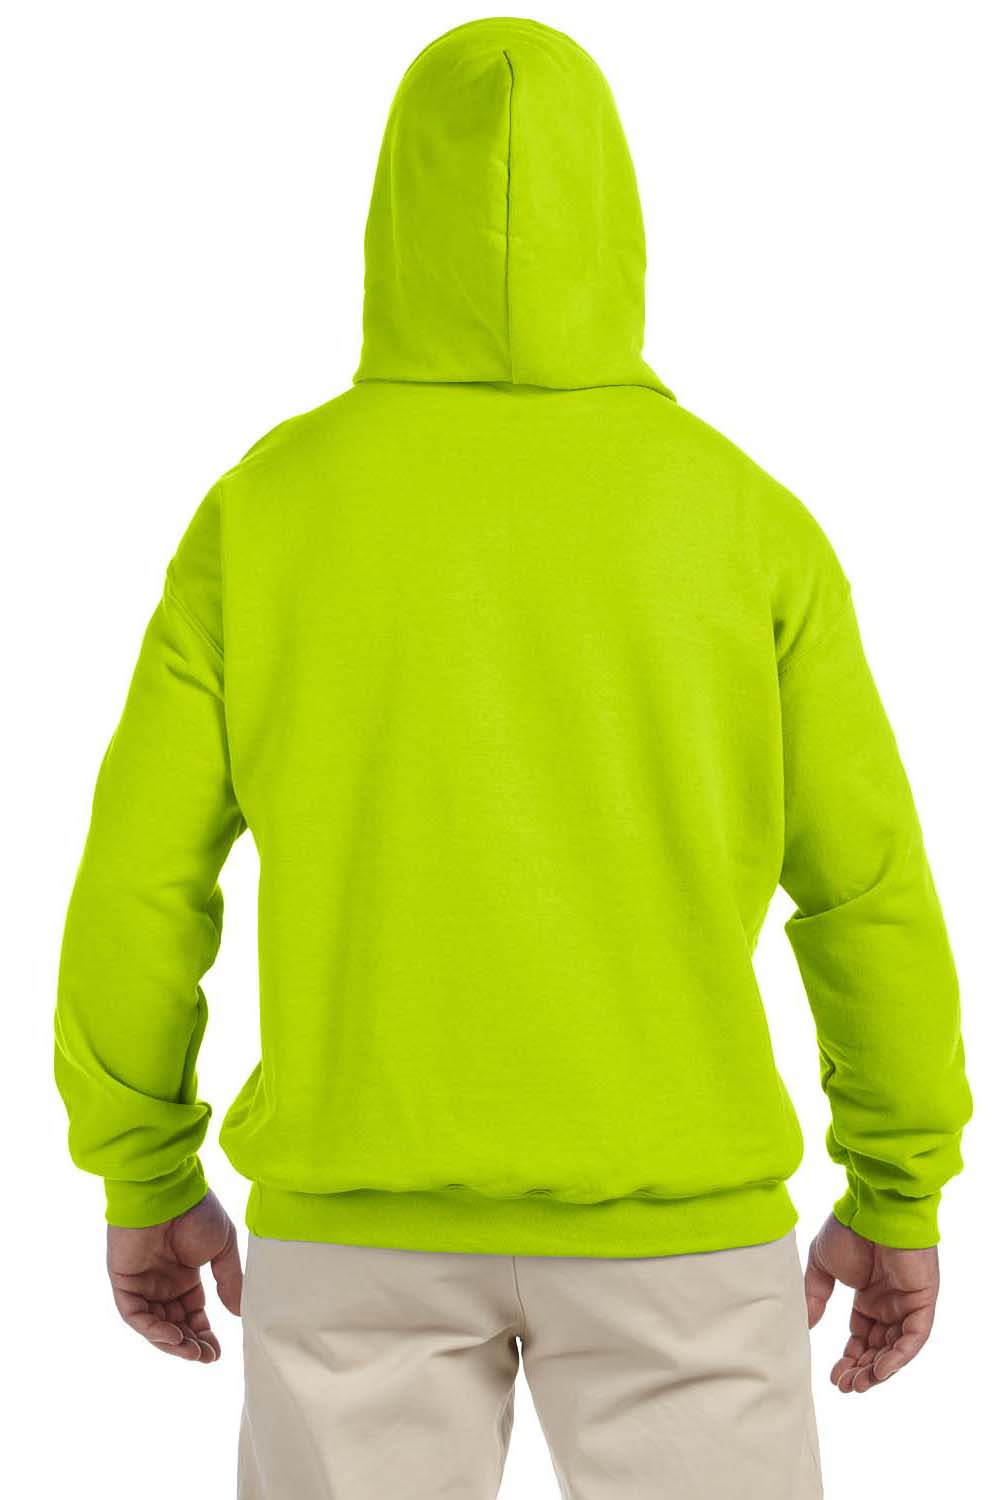 Gildan G125 Mens DryBlend Moisture Wicking Hooded Sweatshirt Hoodie Safety Green Back